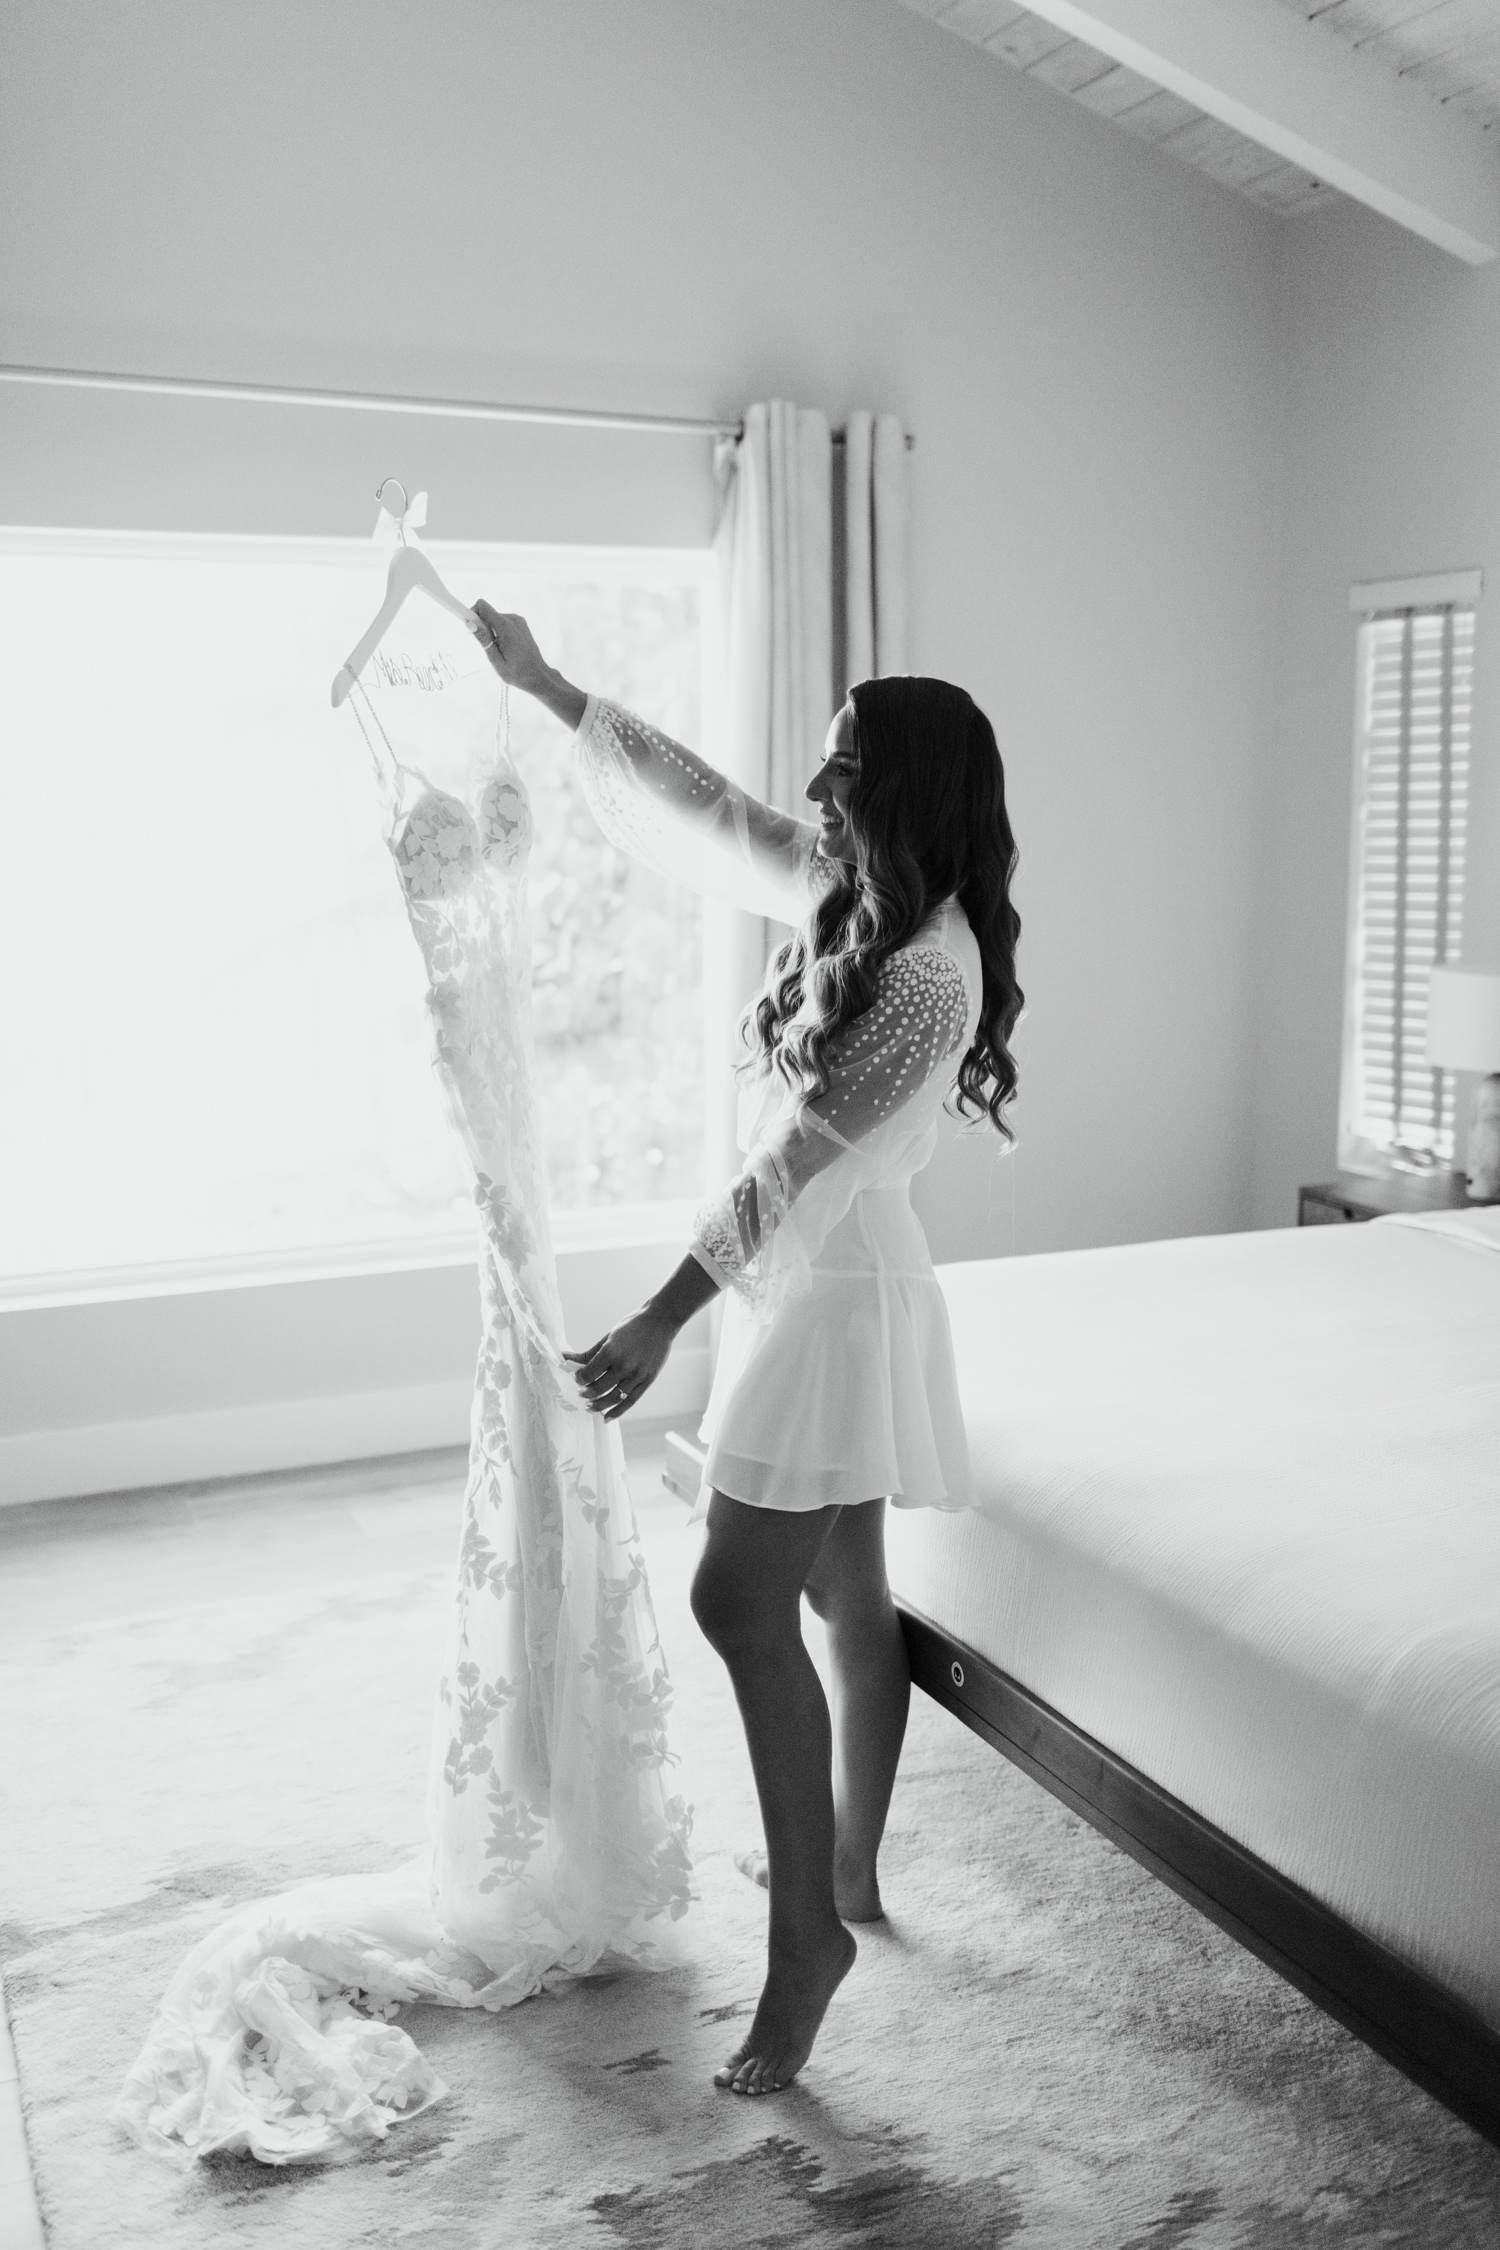 La Siesta Resort Islamorada Wedding Photography by Finding Light Photography